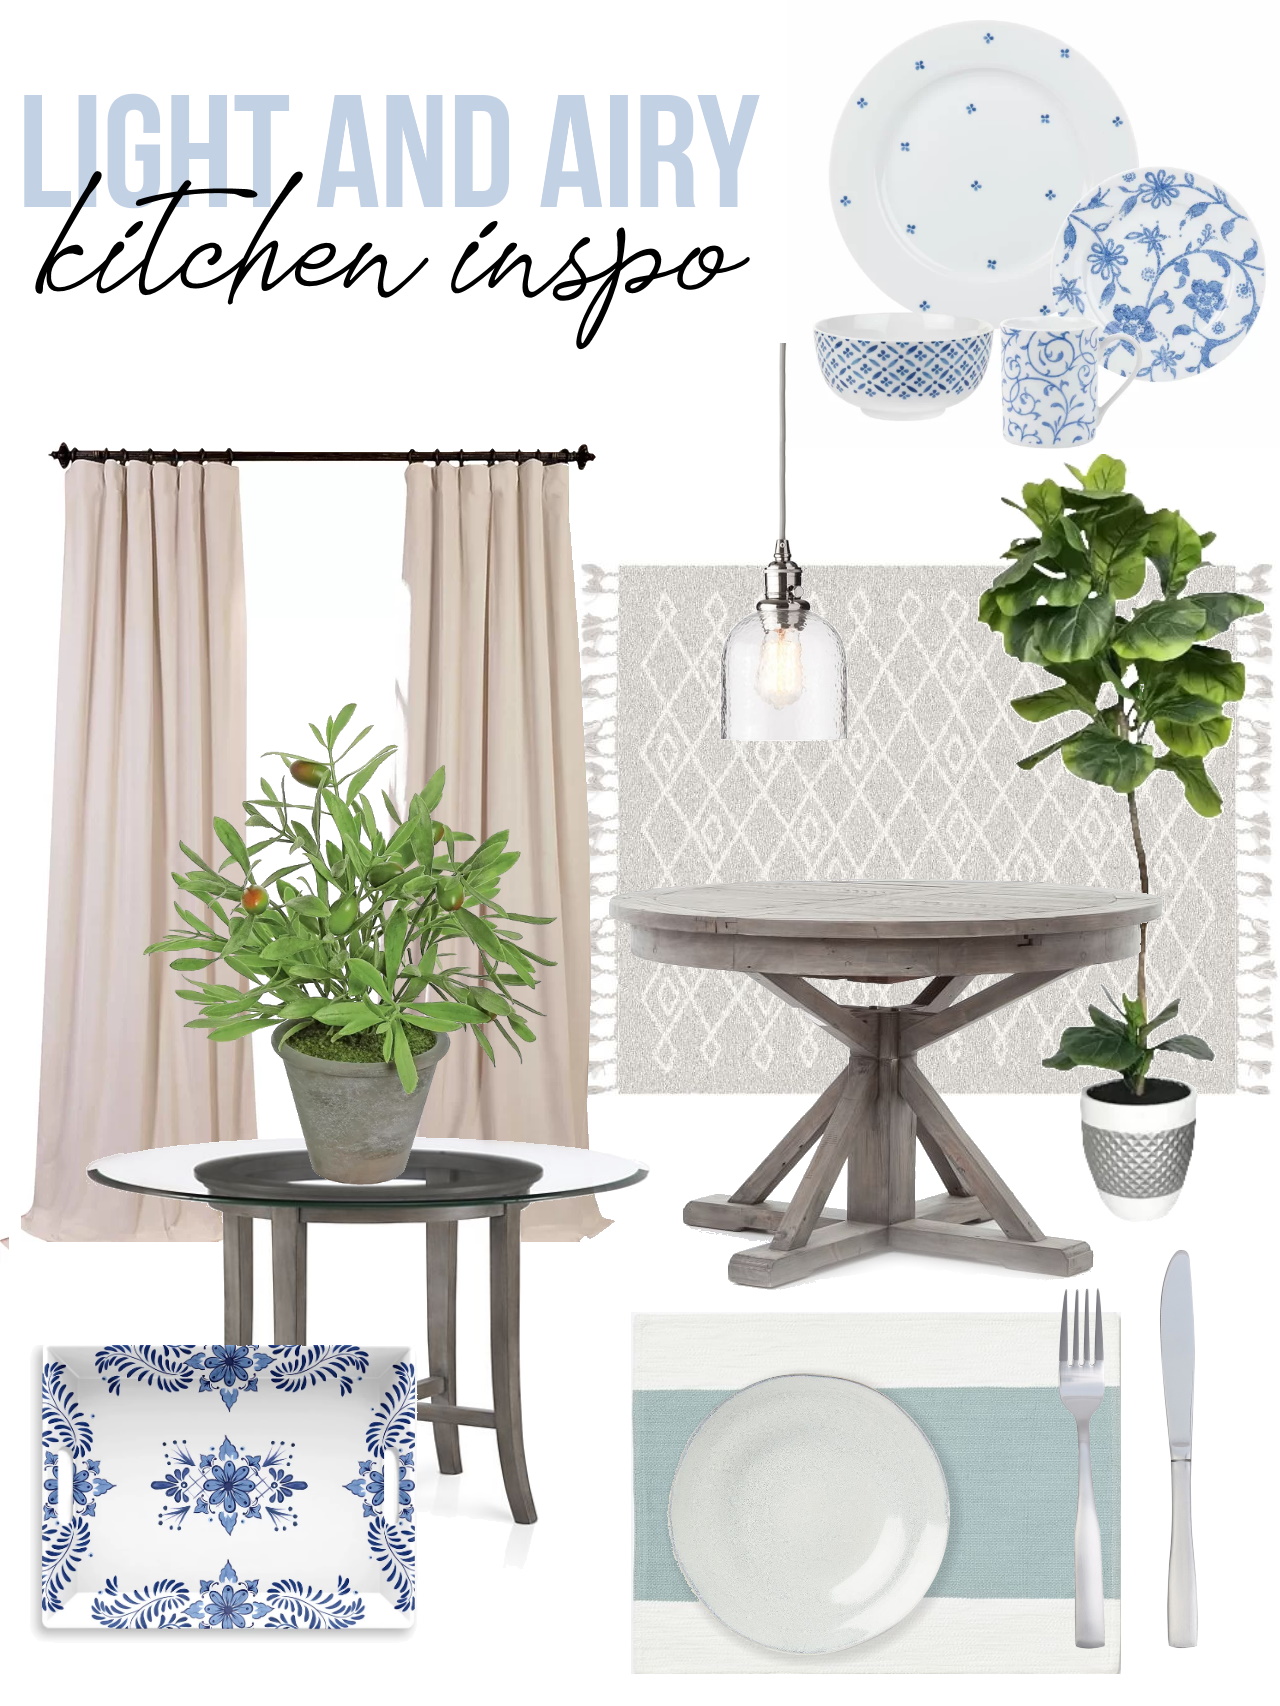 Blue and white kitchen inspiration, kitchen design inspo, kitchen and dining decor ideas